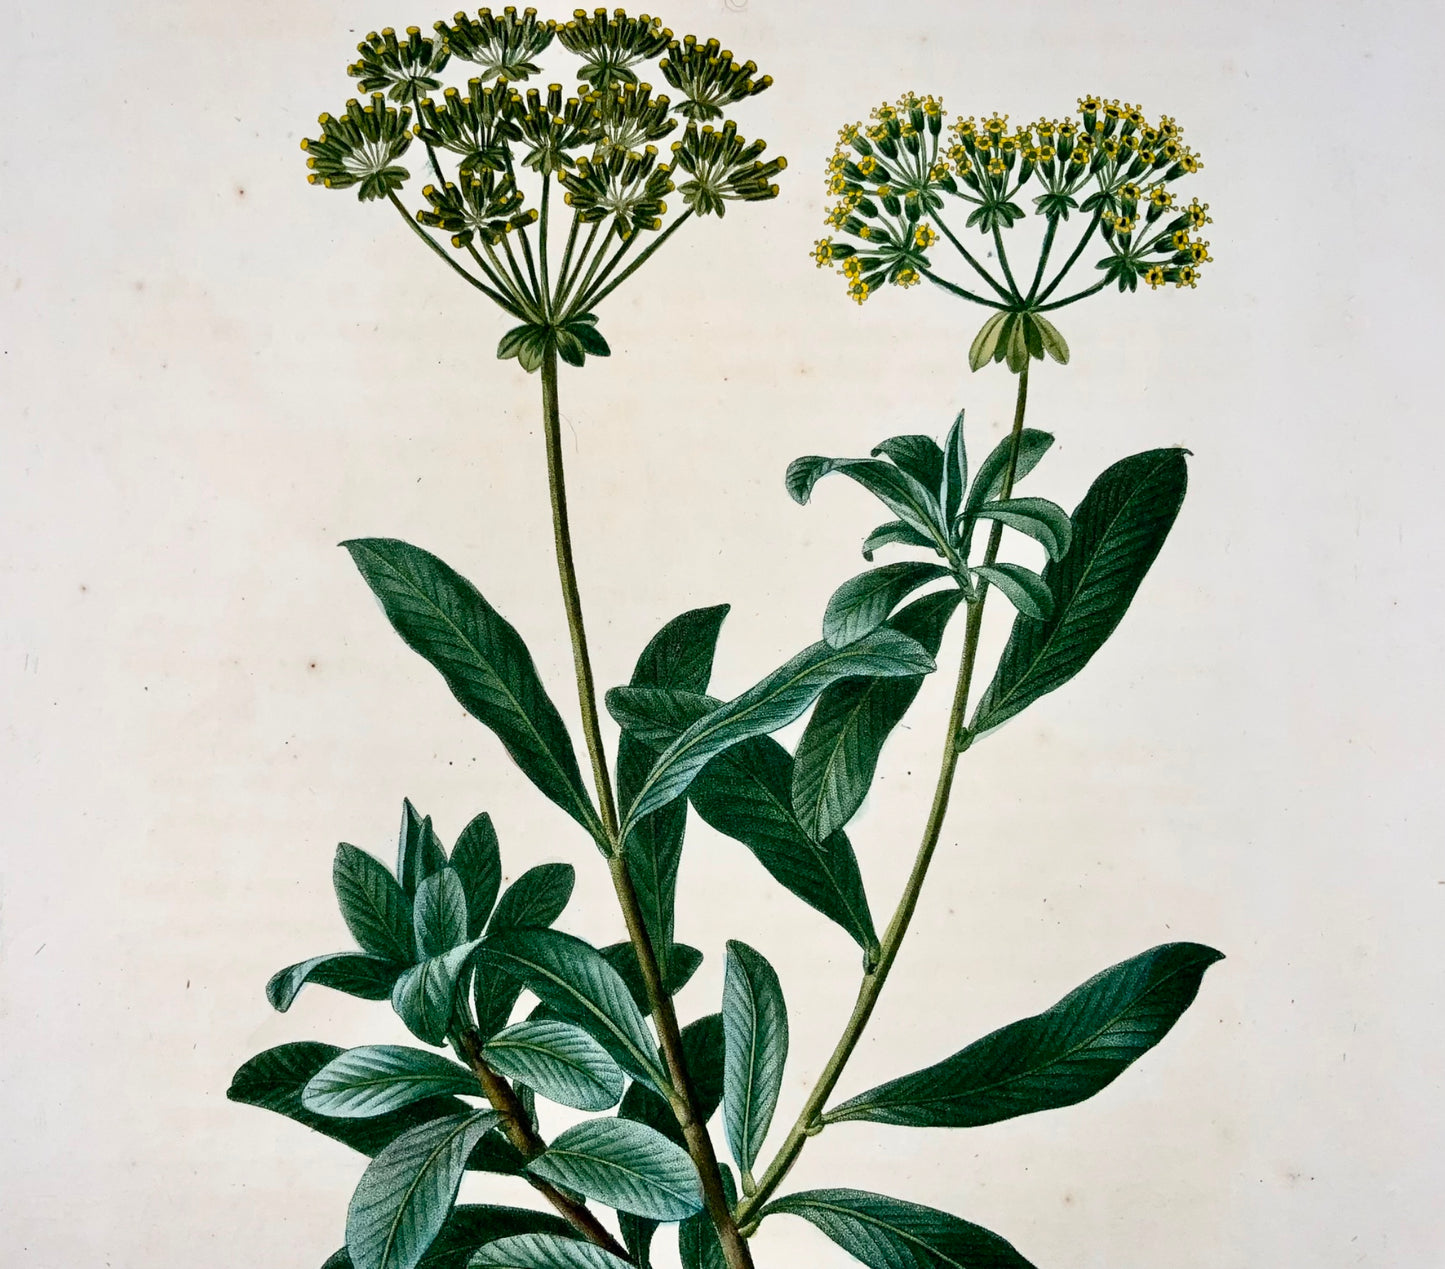 1801 Bupleurum, botanica, Bessa, Dufour, incisione su foglio, finitura a mano